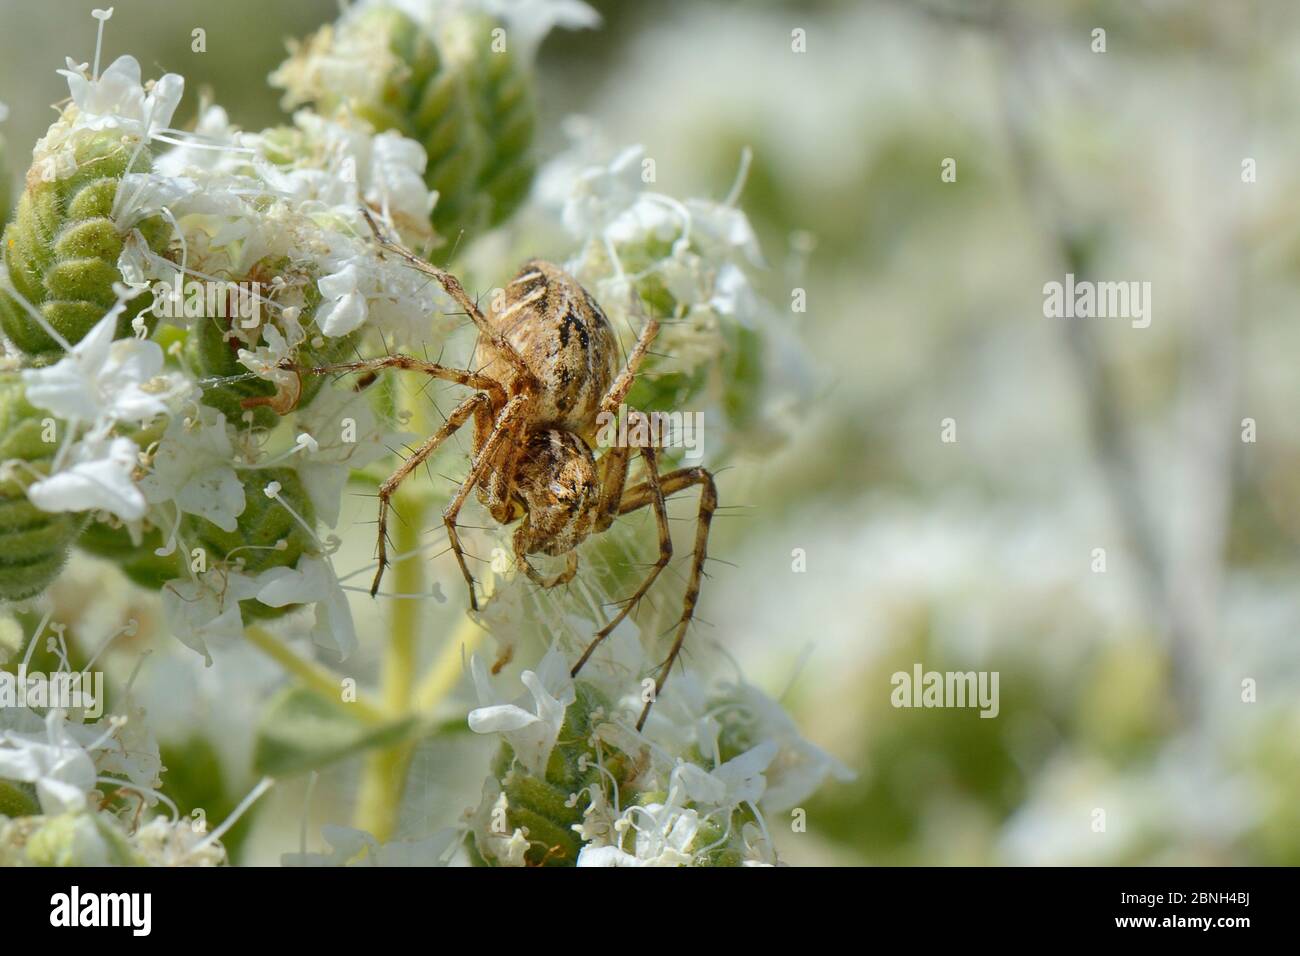 Lynx spider (Oxyopes heteropthalmus) hunting for insect prey on Cretan oregano flowers (Origanum onites), Lesbos / Lesvos, Greece, May. Stock Photo